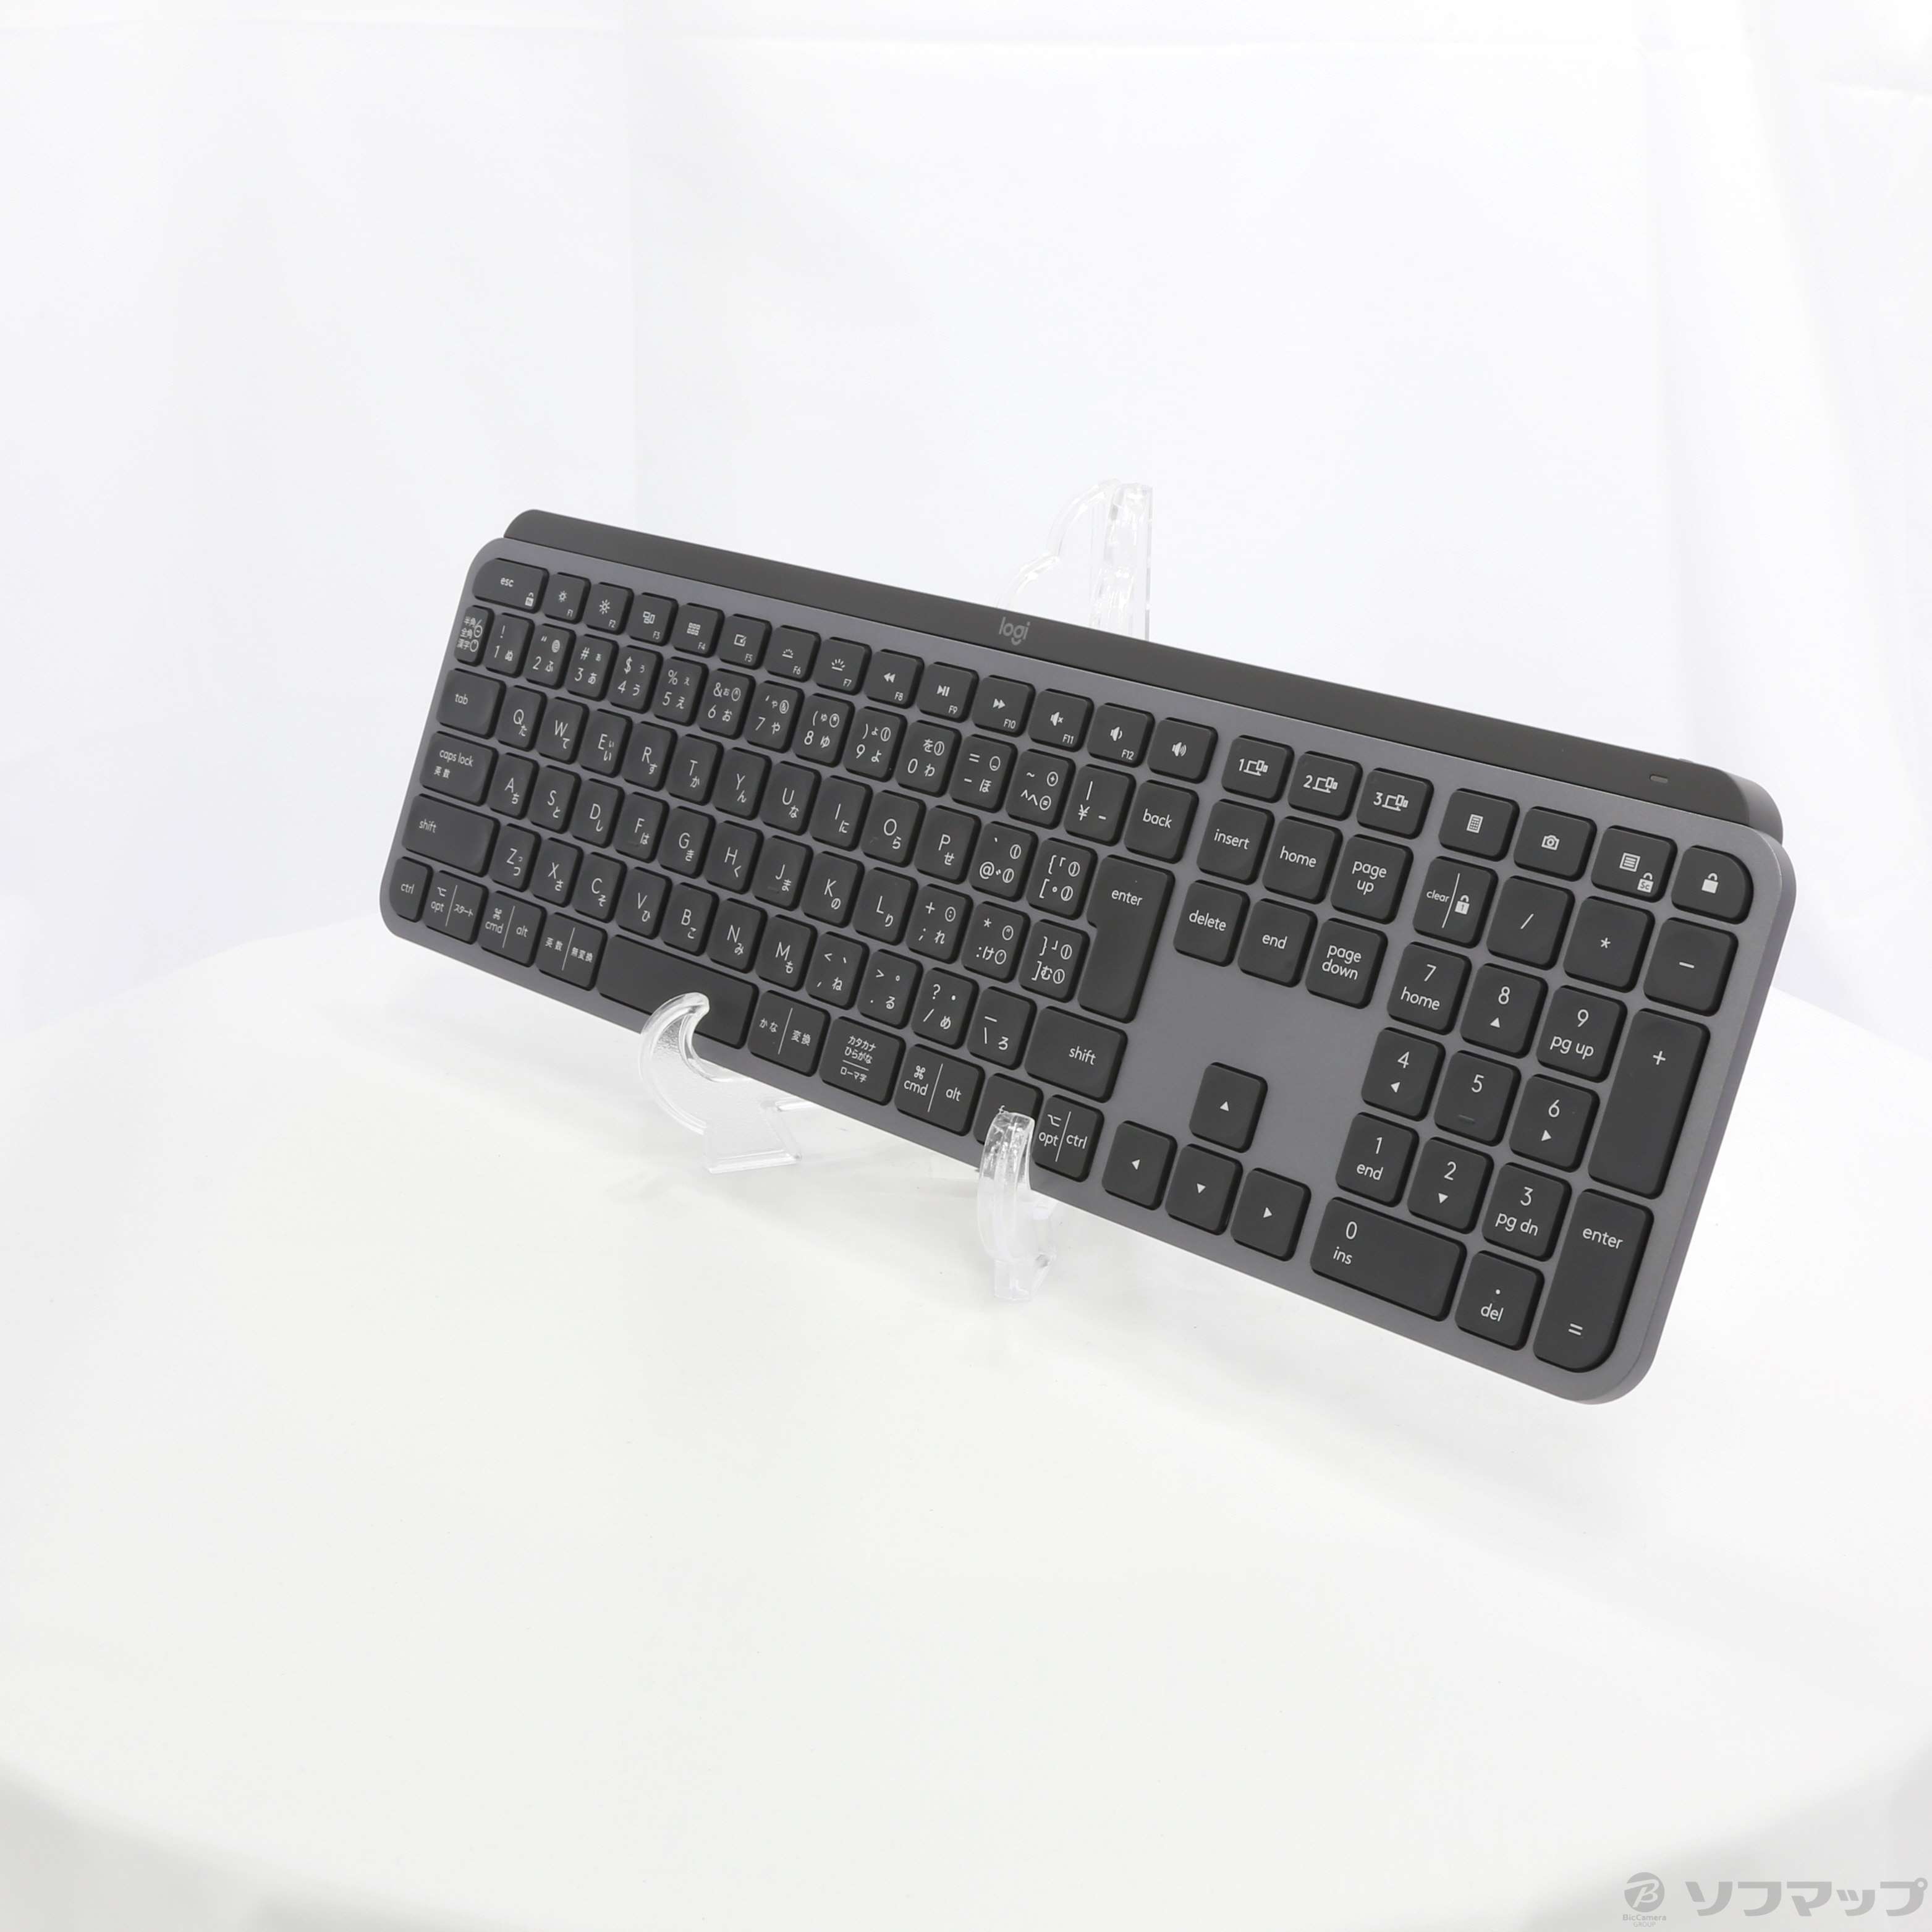 中古】MX KEYS Advanced Wireless Illuminated Keyboard KX800